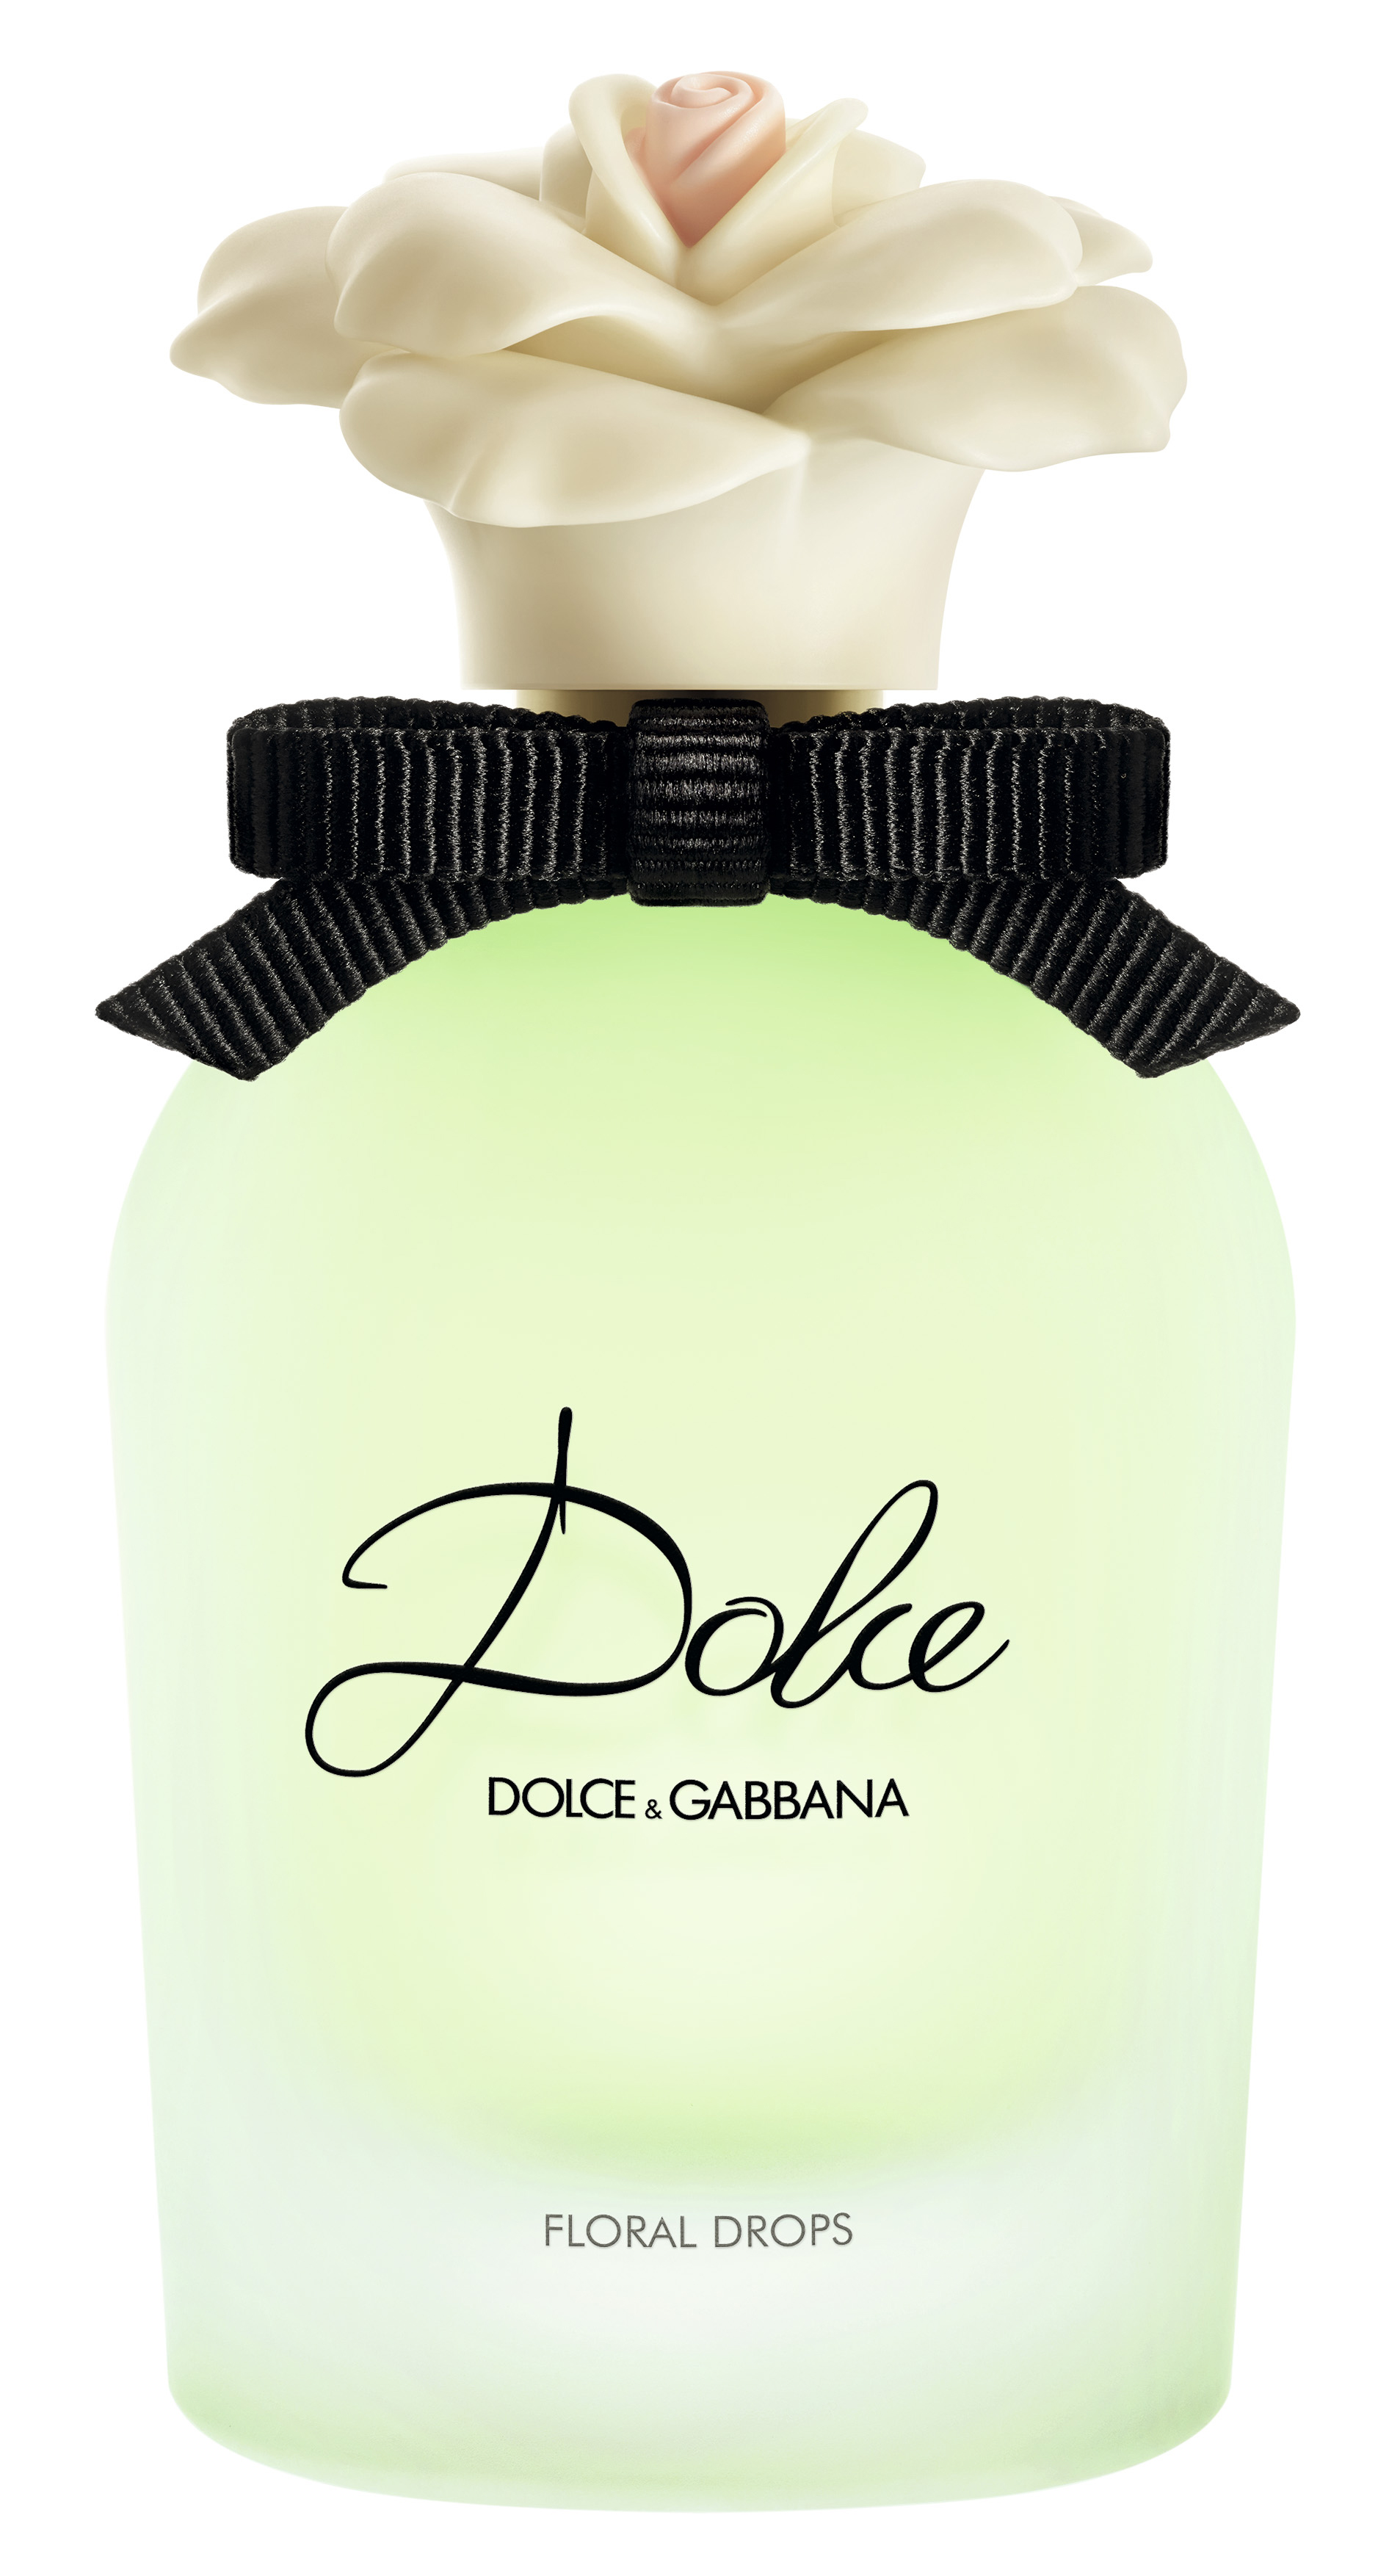 Dolce & Gabbana Floral Drops EdT 30ml